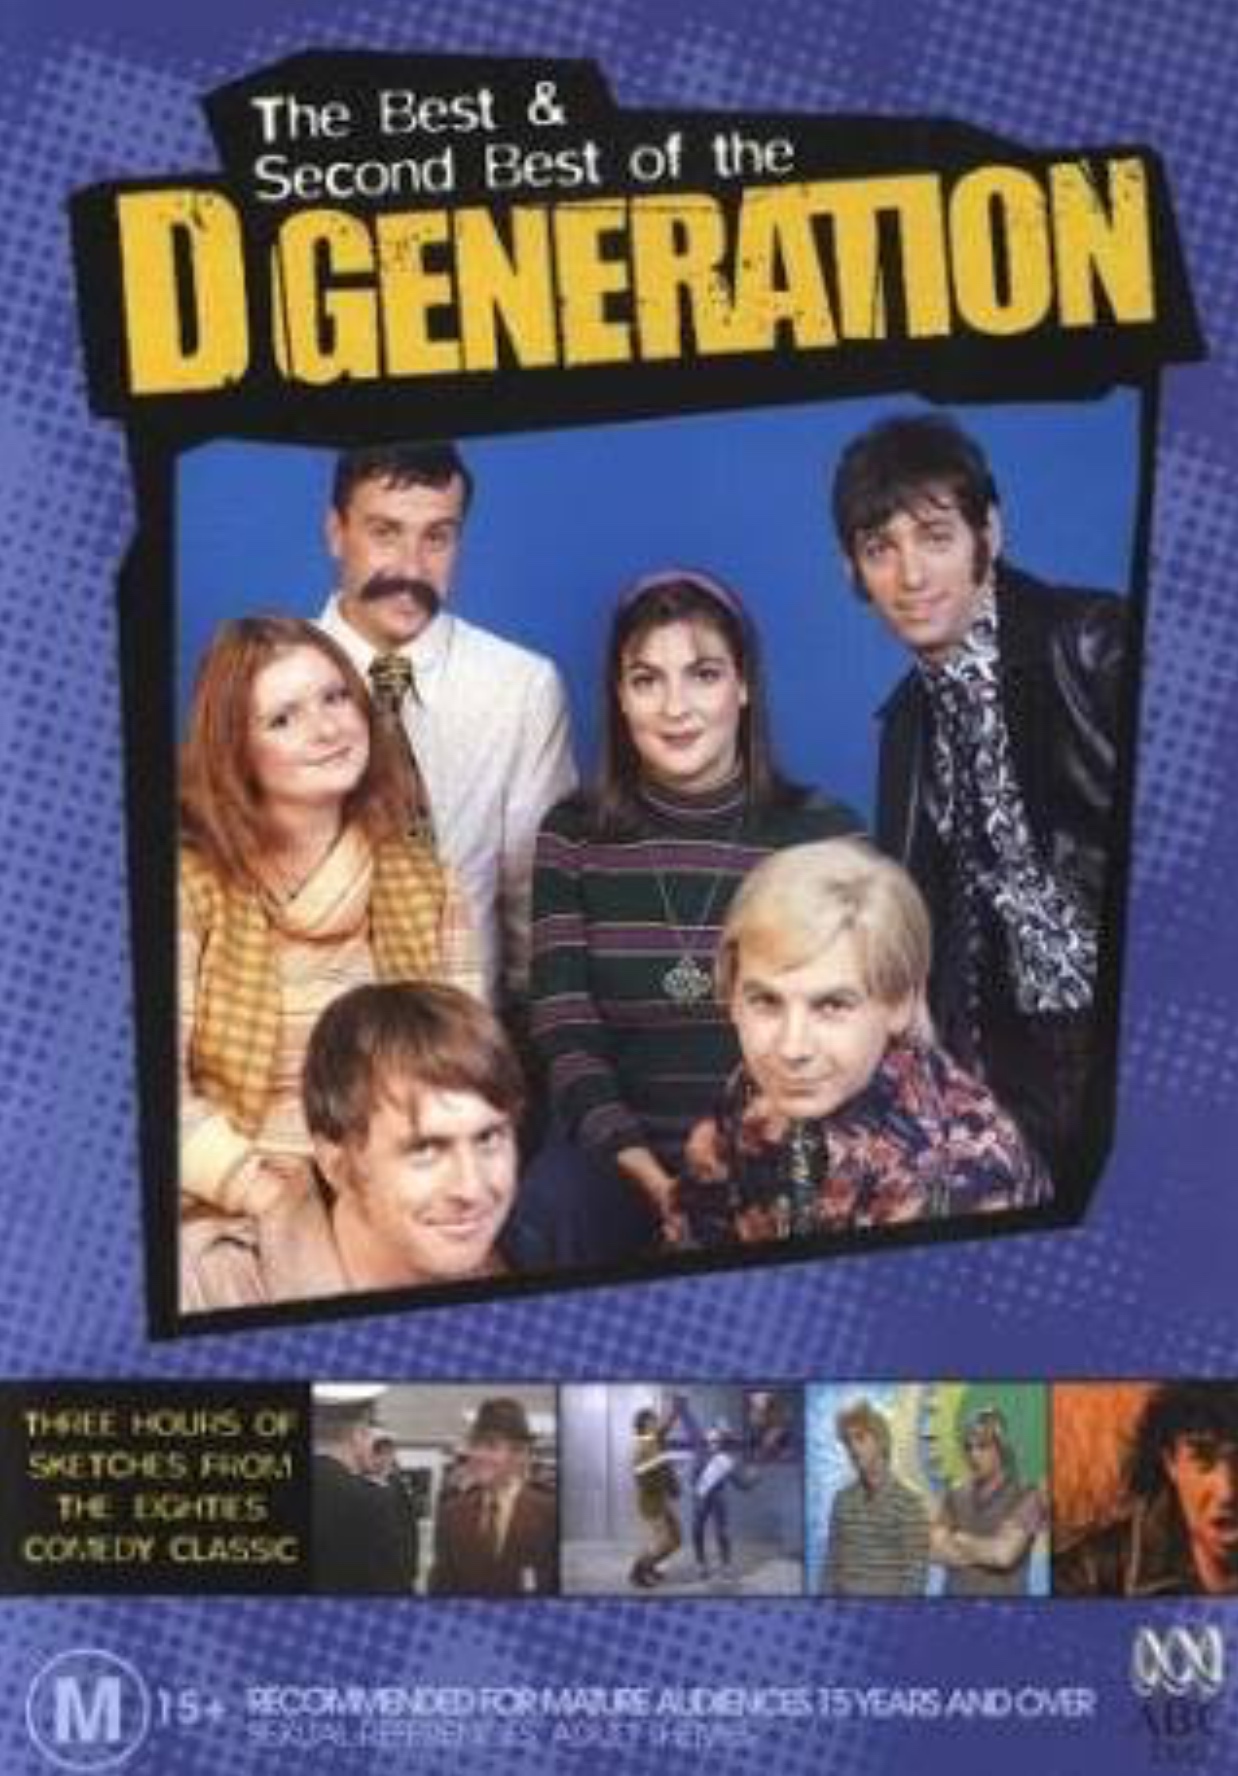 The D Generation